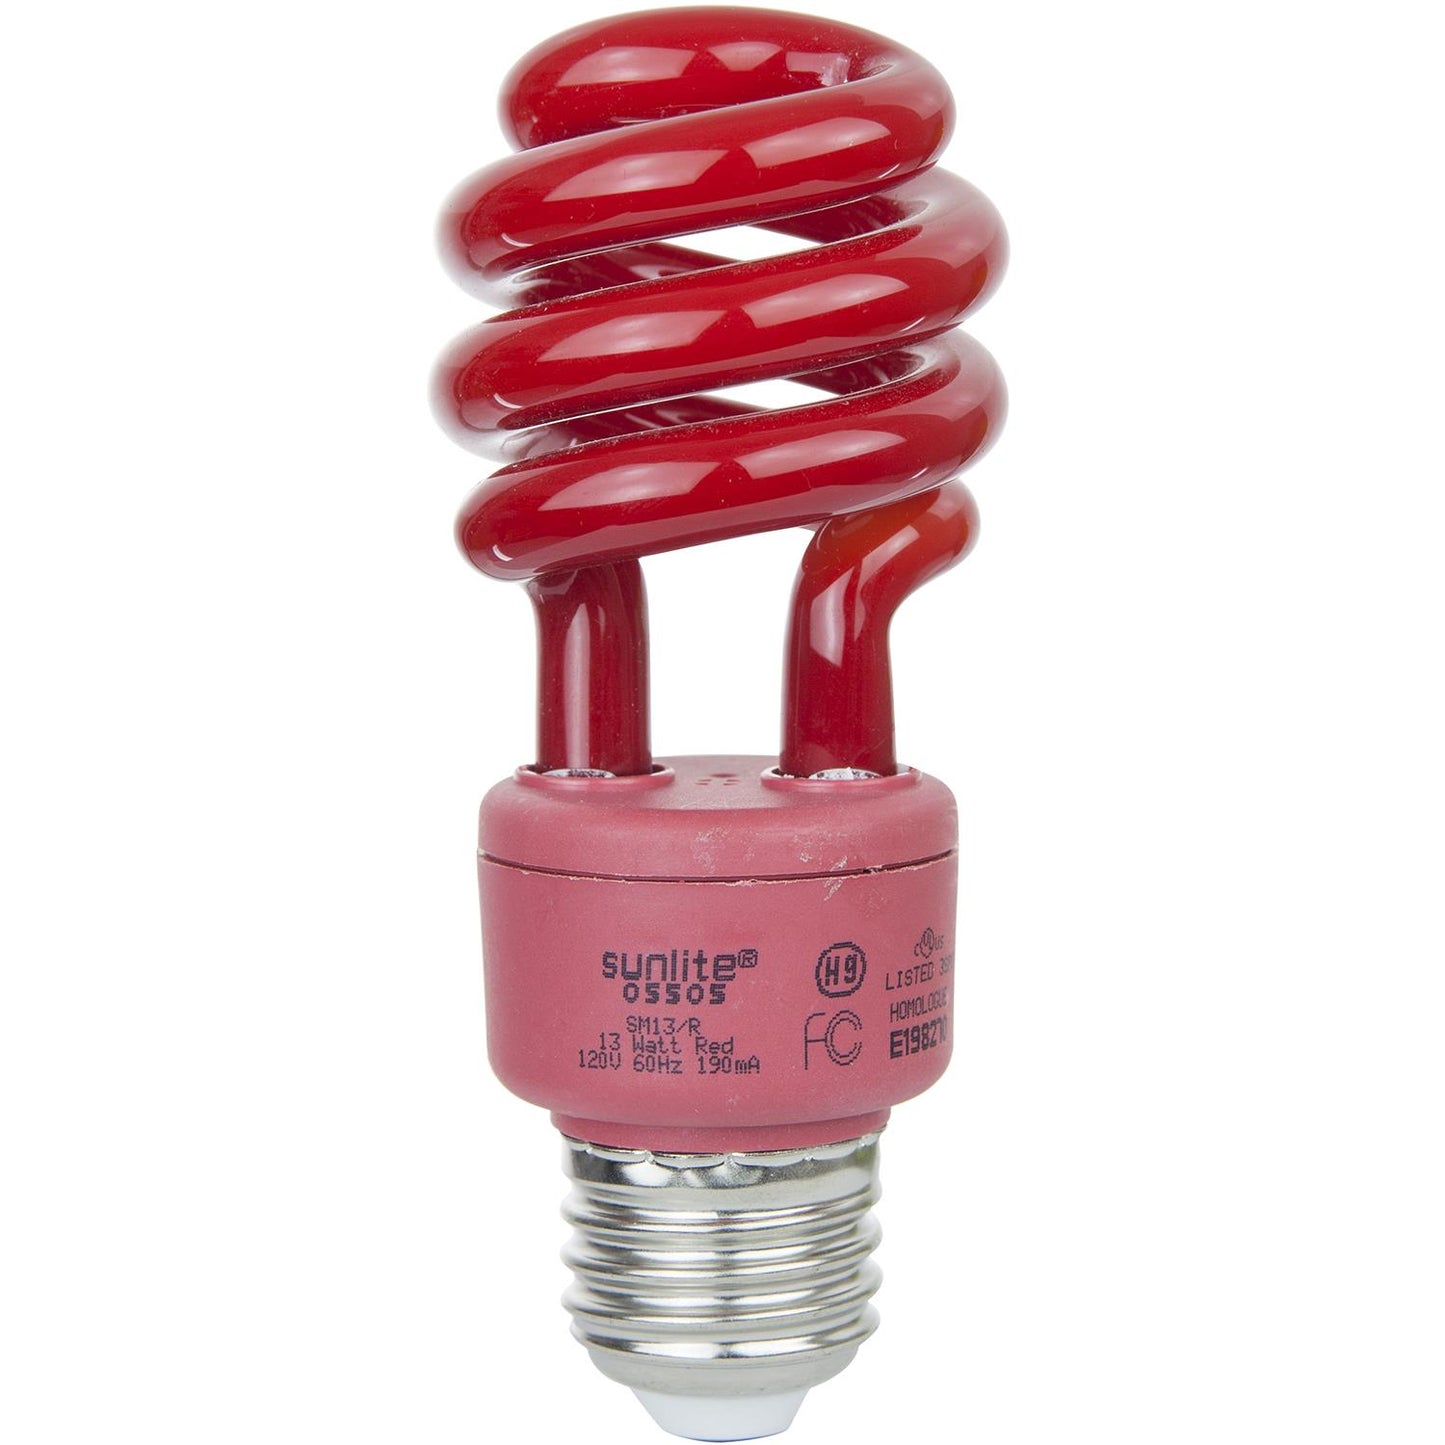 Sunlite 13 Watt Colored Mini Spiral, Medium Base, Red